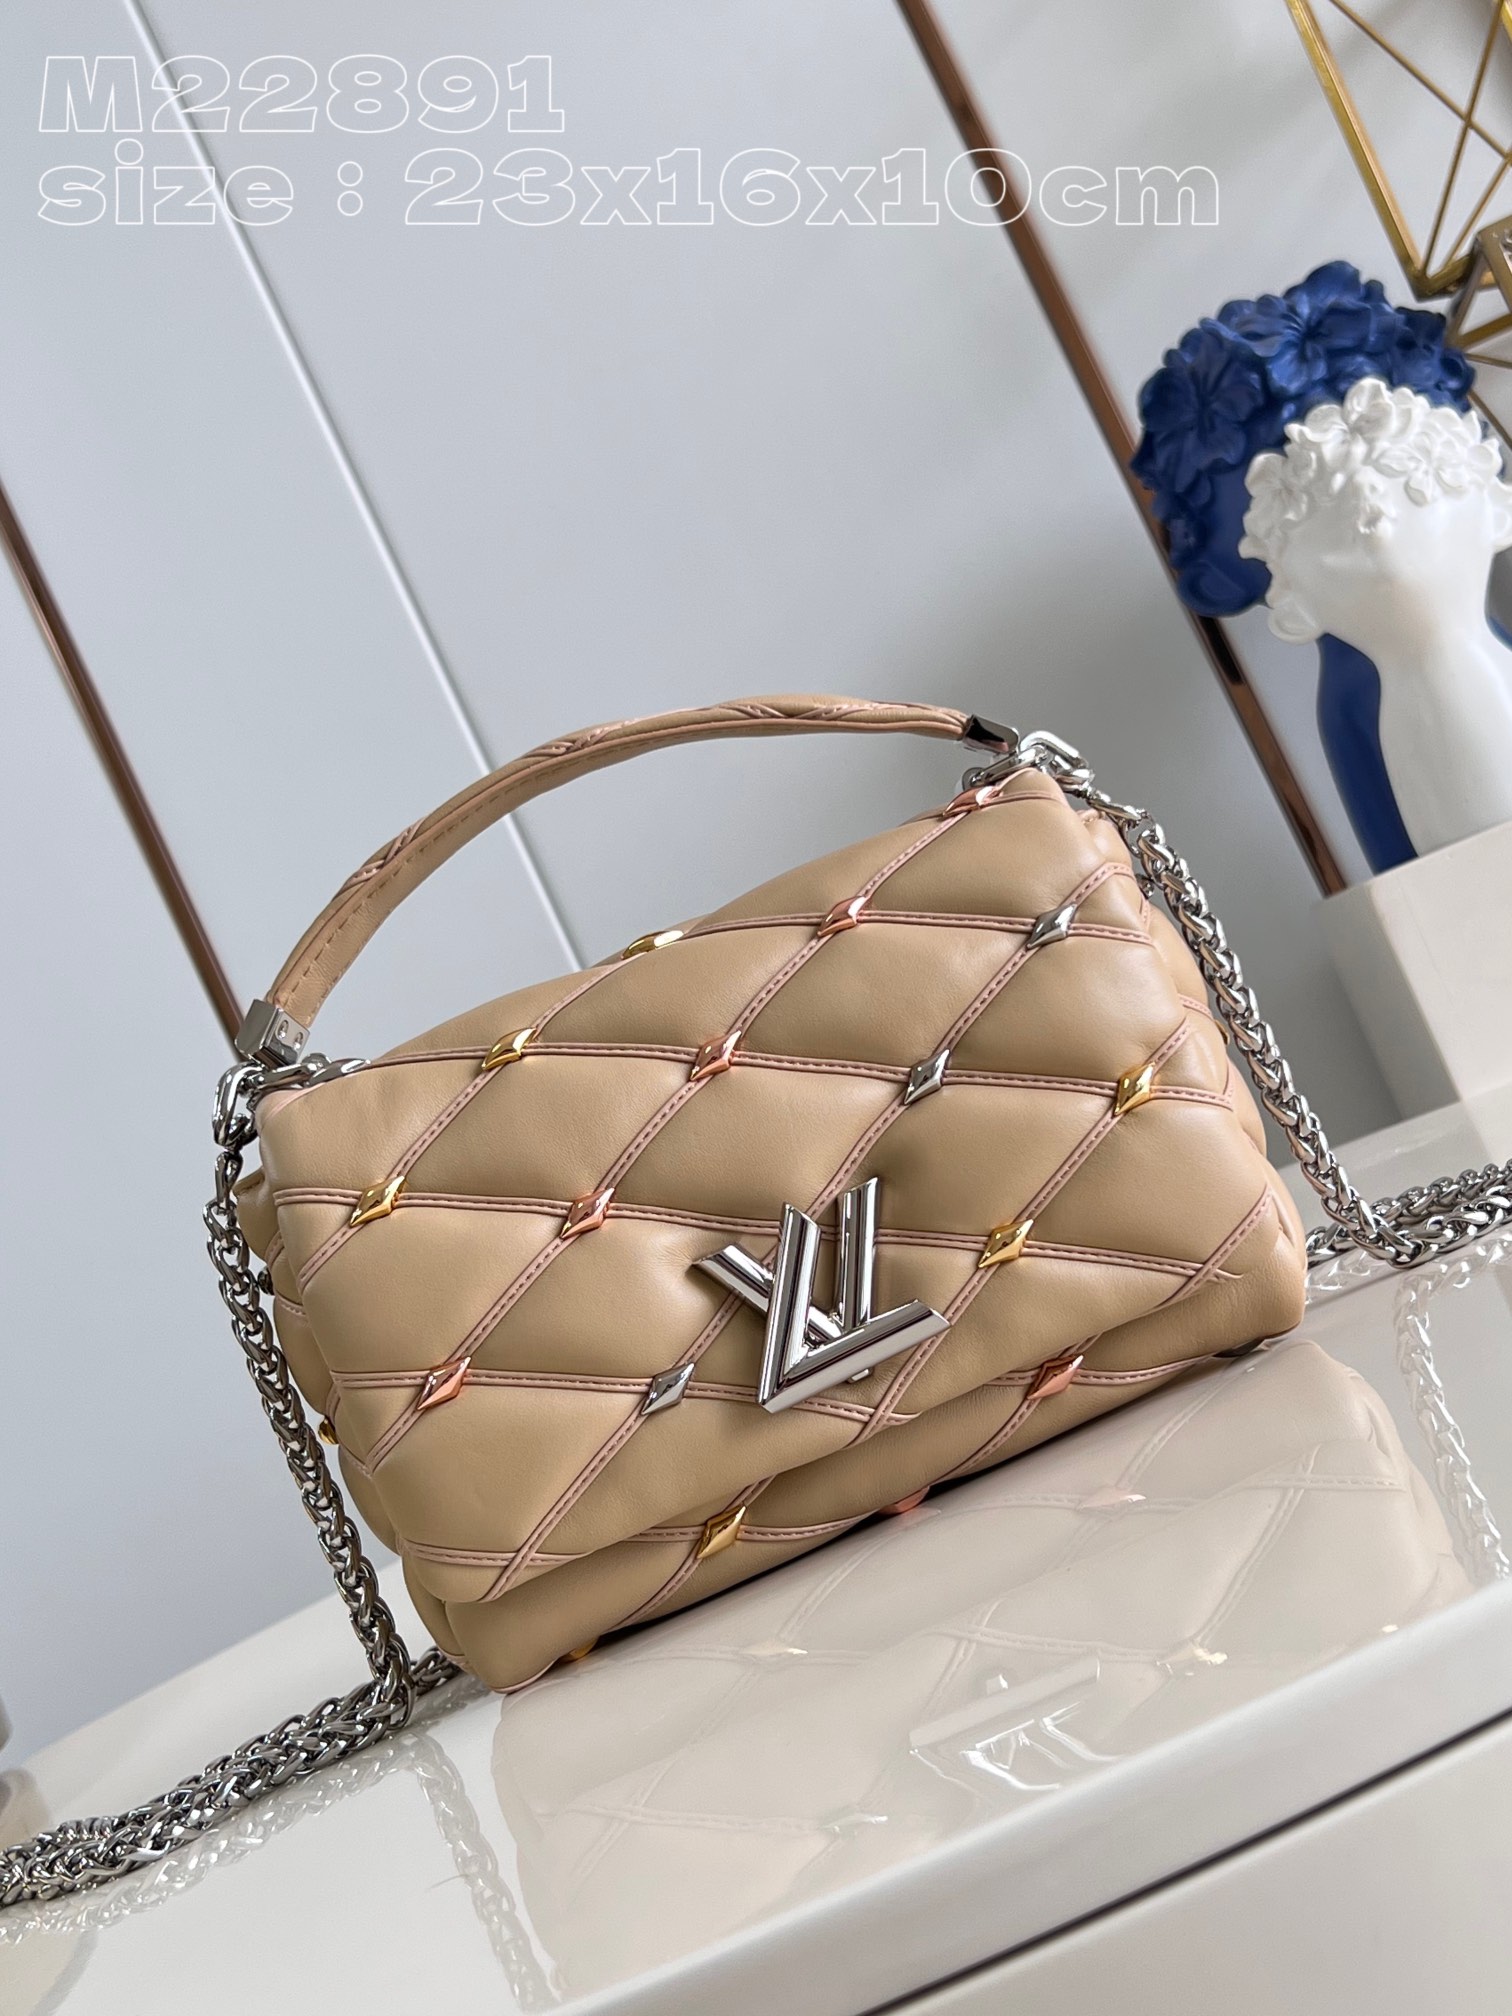 Louis Vuitton Bags Handbags mirror copy luxury
 Apricot Color Sheepskin LV Twist M22891